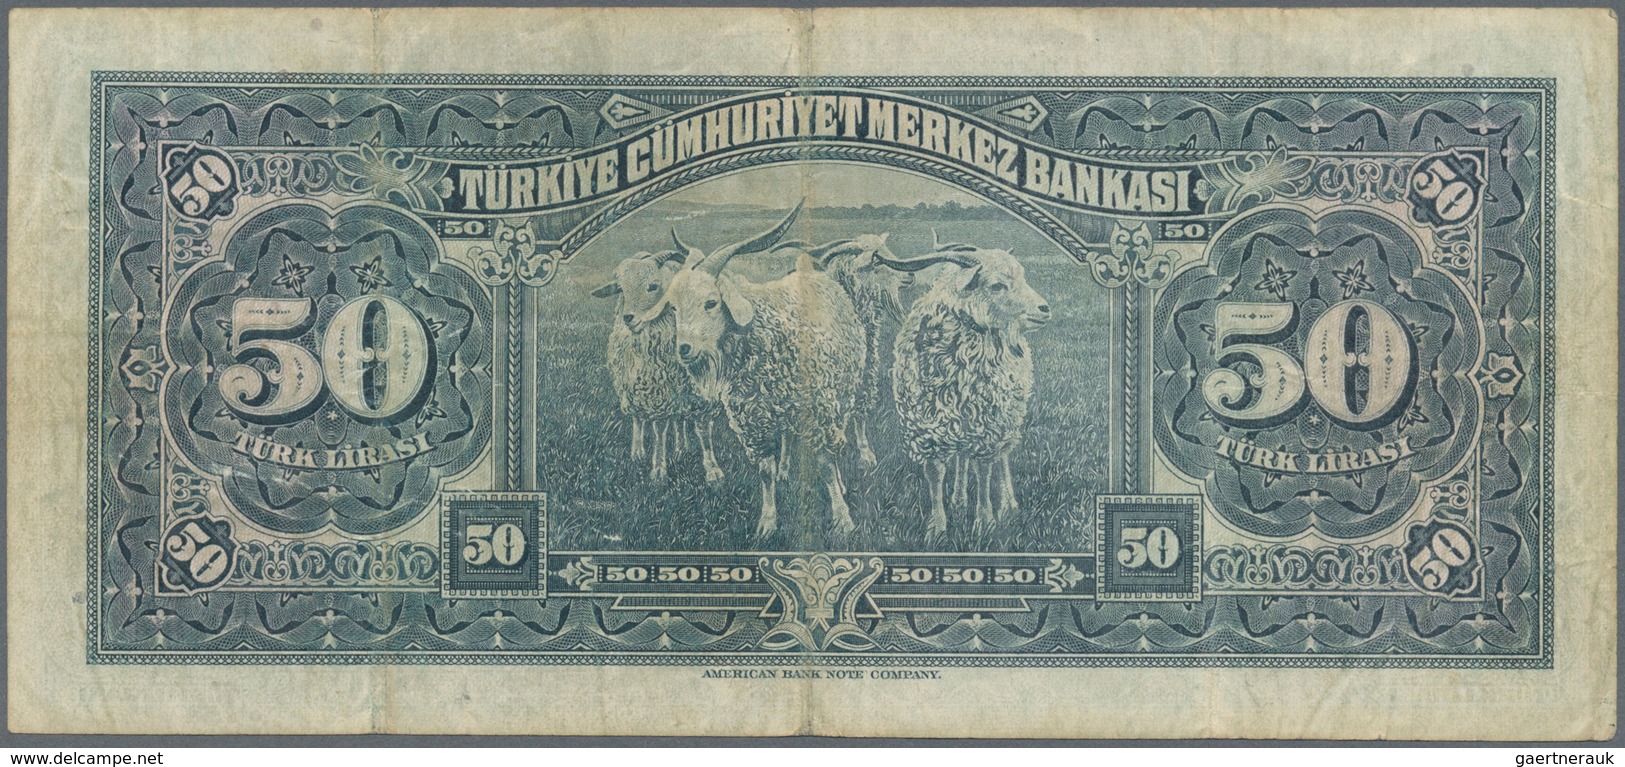 02536 Turkey / Türkei: 50 Lirasi L. 1930 (1942-1947) "?nönü" - 3rd Issue, P.143, Still A Nice Note With So - Turquia